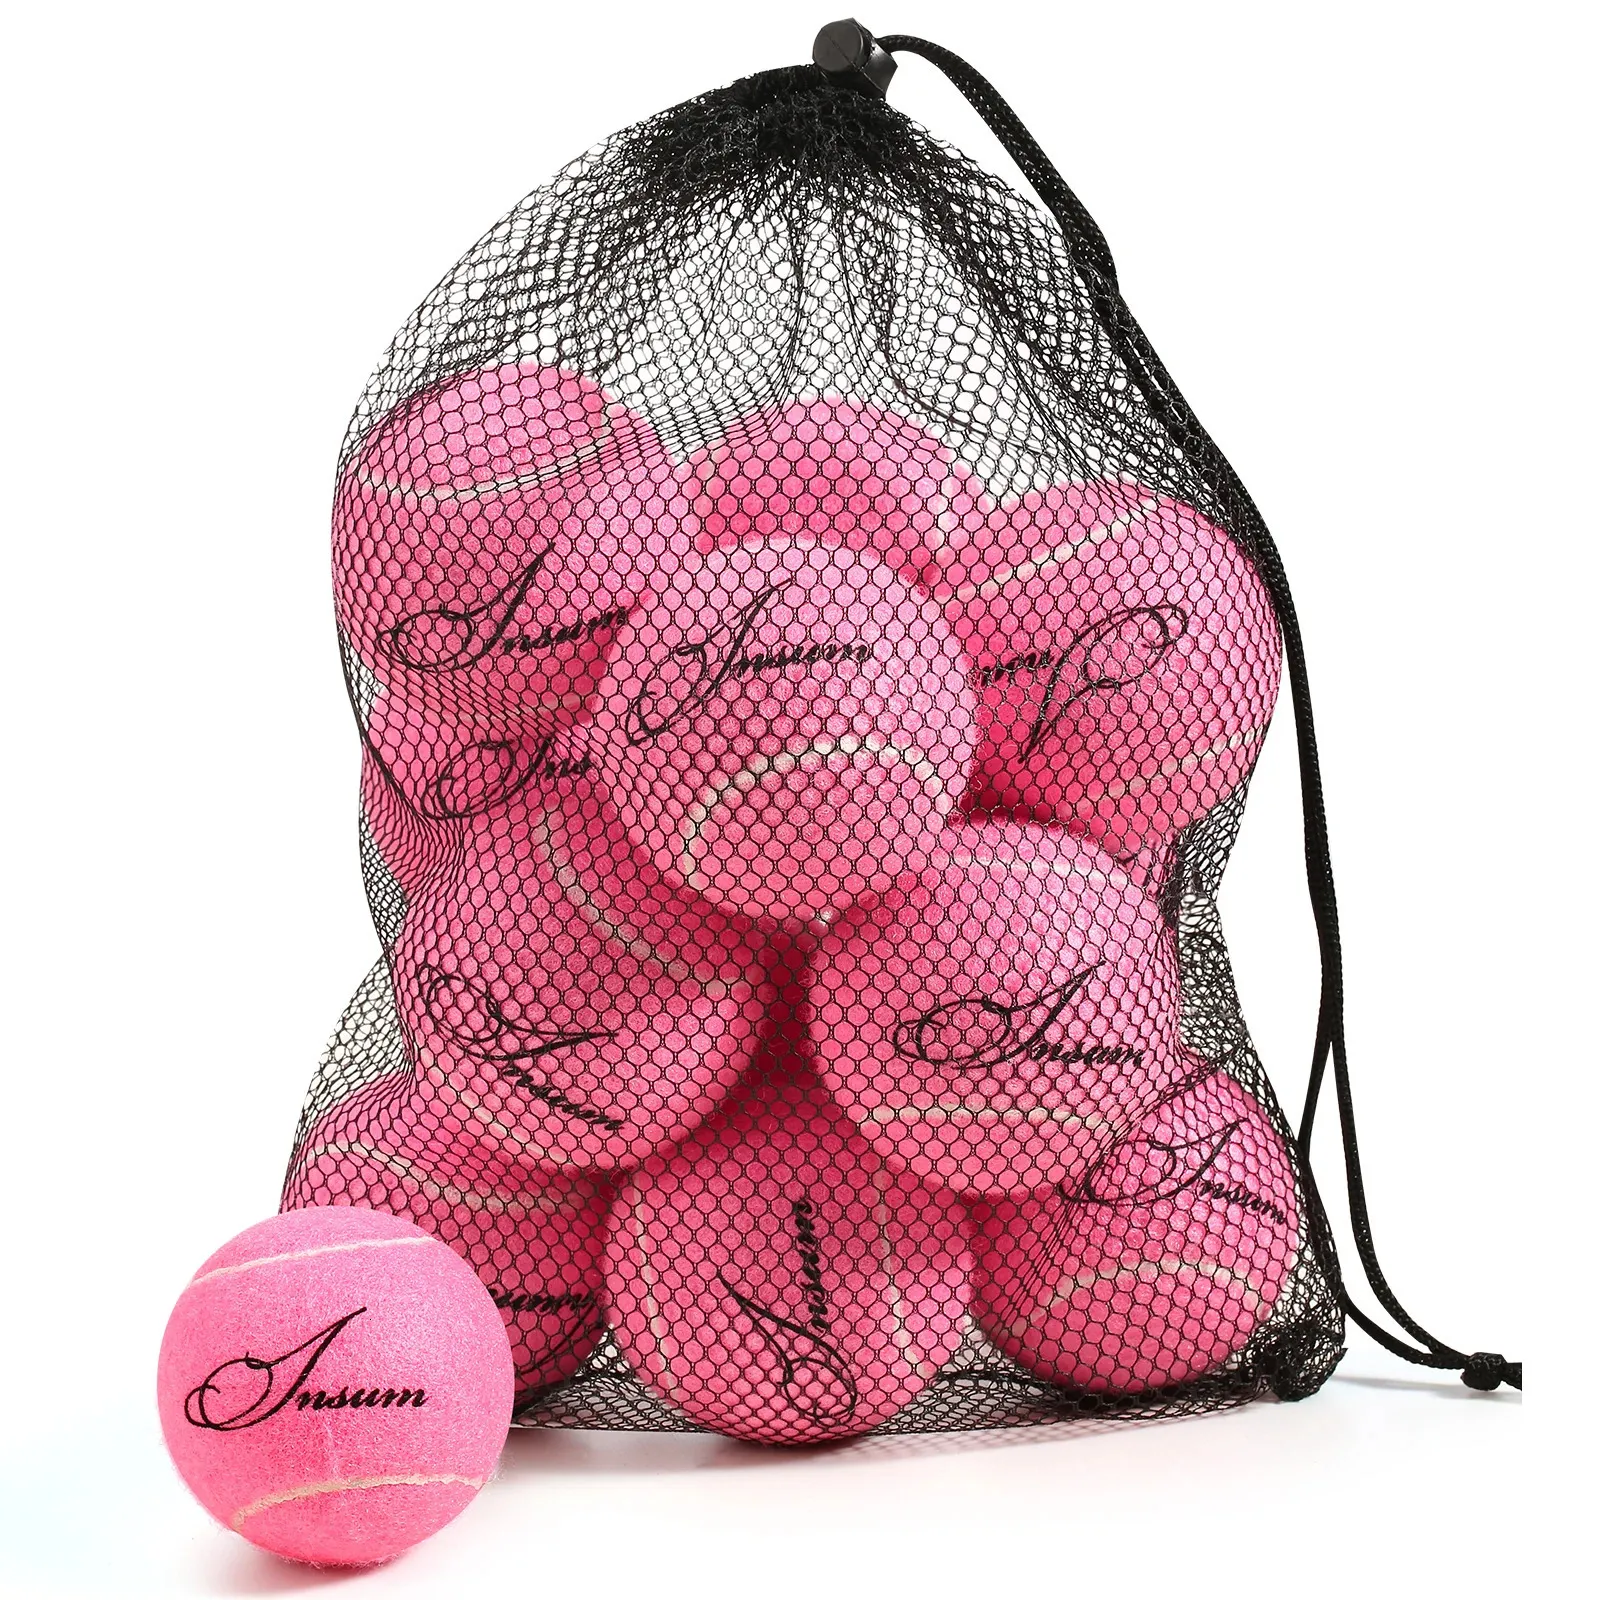 insum pet dog tennis ball 12pcs/mesh bage لسهولة حمل خيارات ألوان متعددة التدريب المتقدم للمبتدئين لعبة الكلب 240322